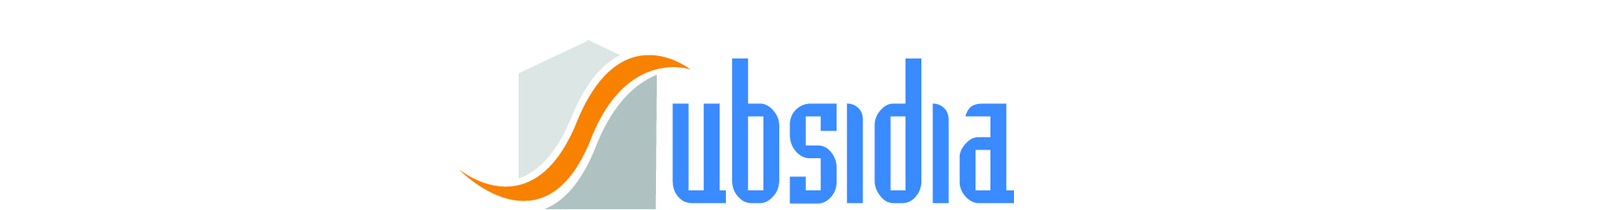 image of Subsidia logo, top half